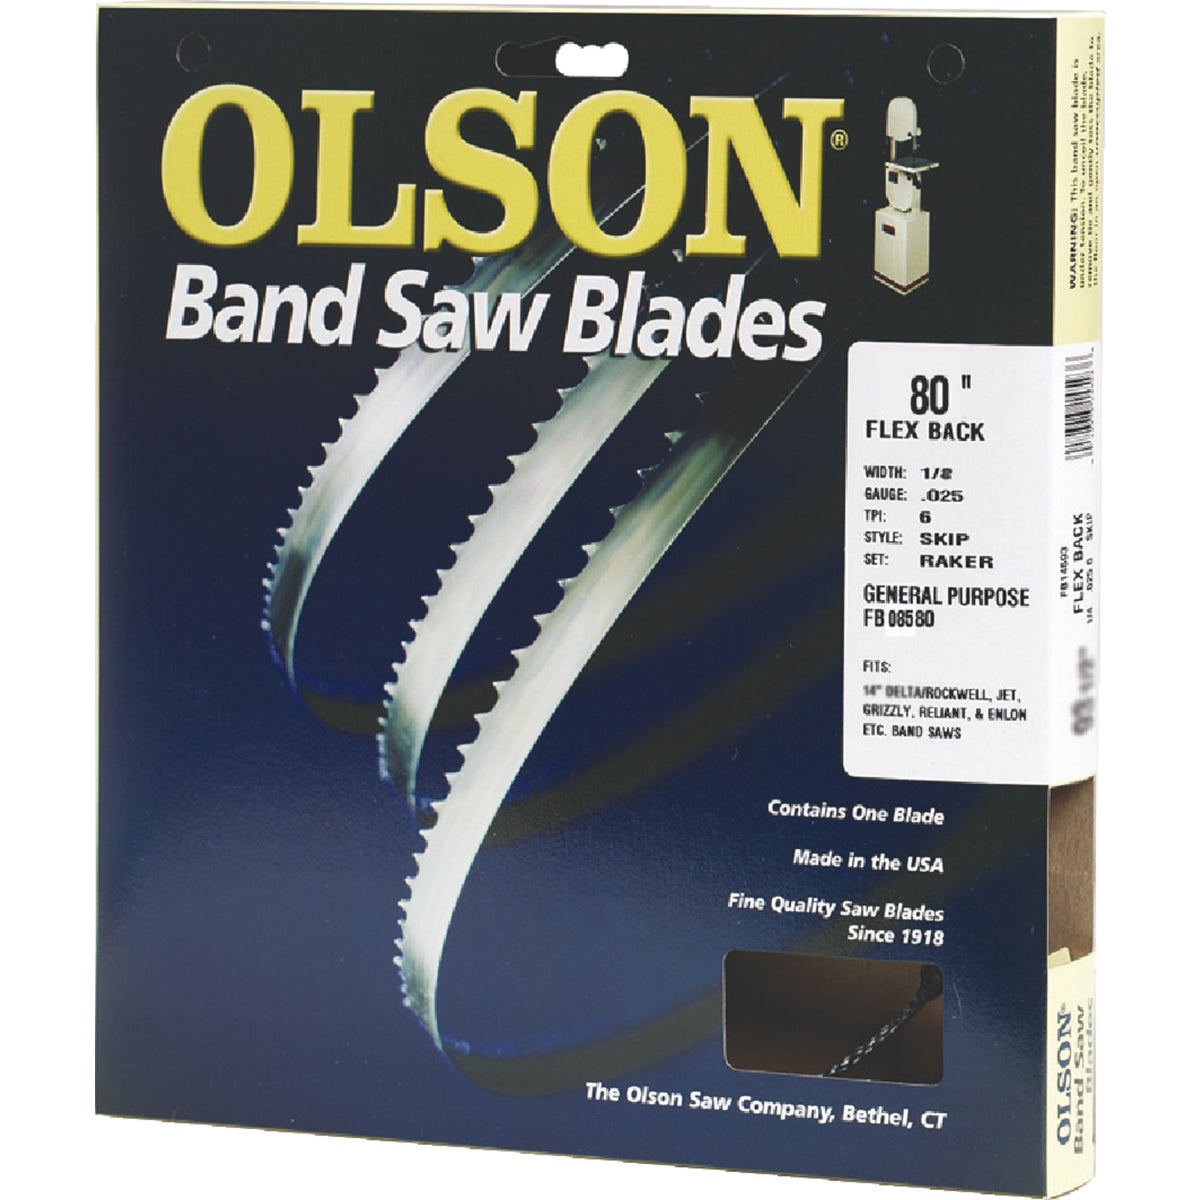 Olson 80 In. x 1/8 In. 14 TPI Regular Flex Back Band Saw Blade